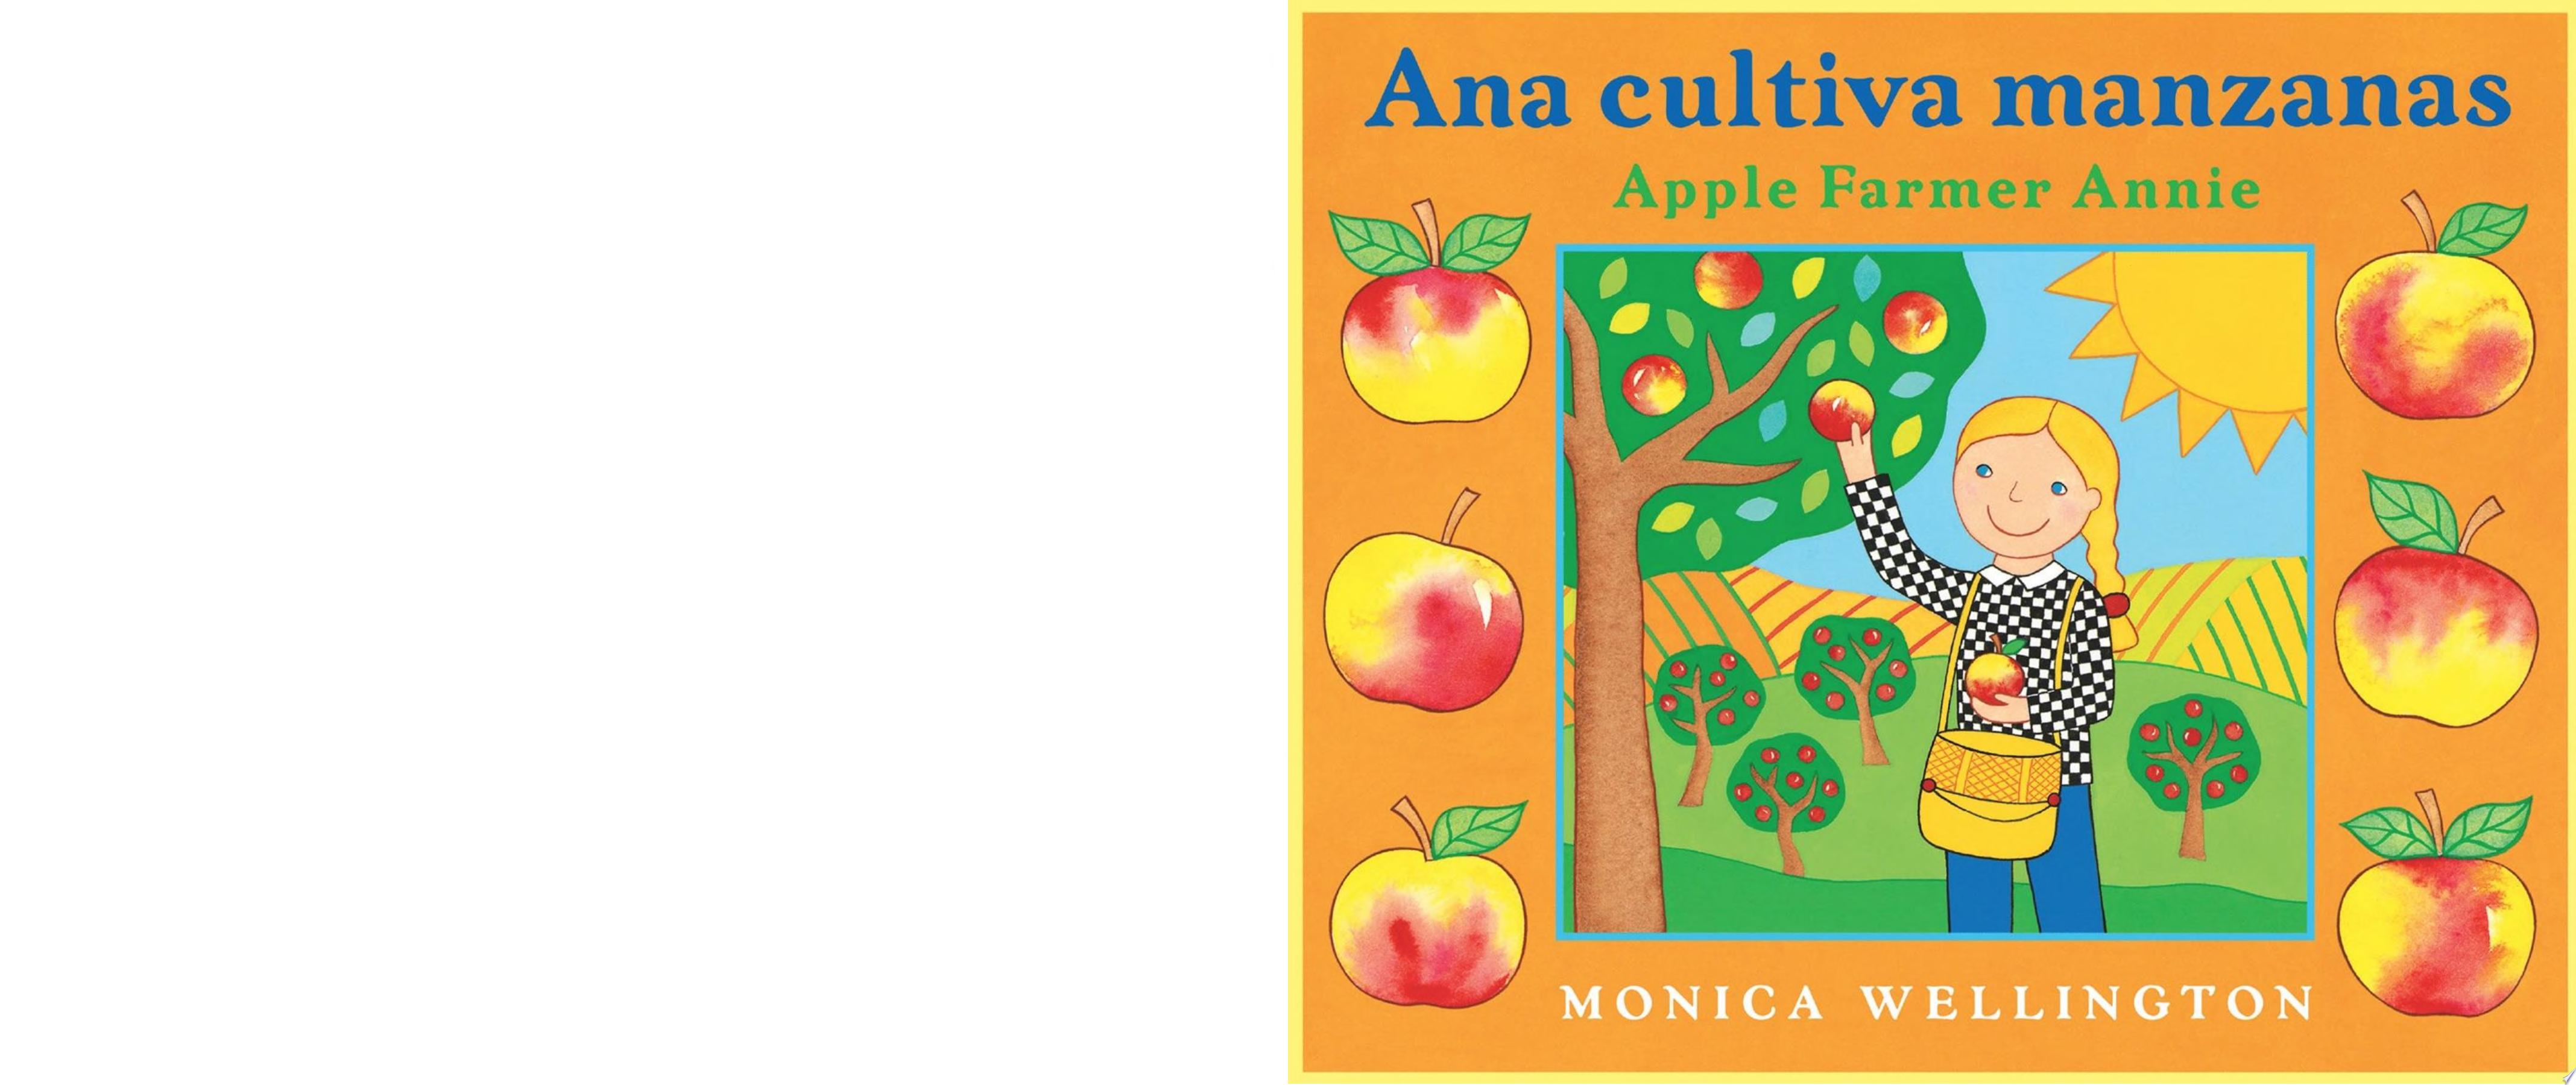 Image for "Ana Cultiva Manzanas / Apple Farmer Annie"